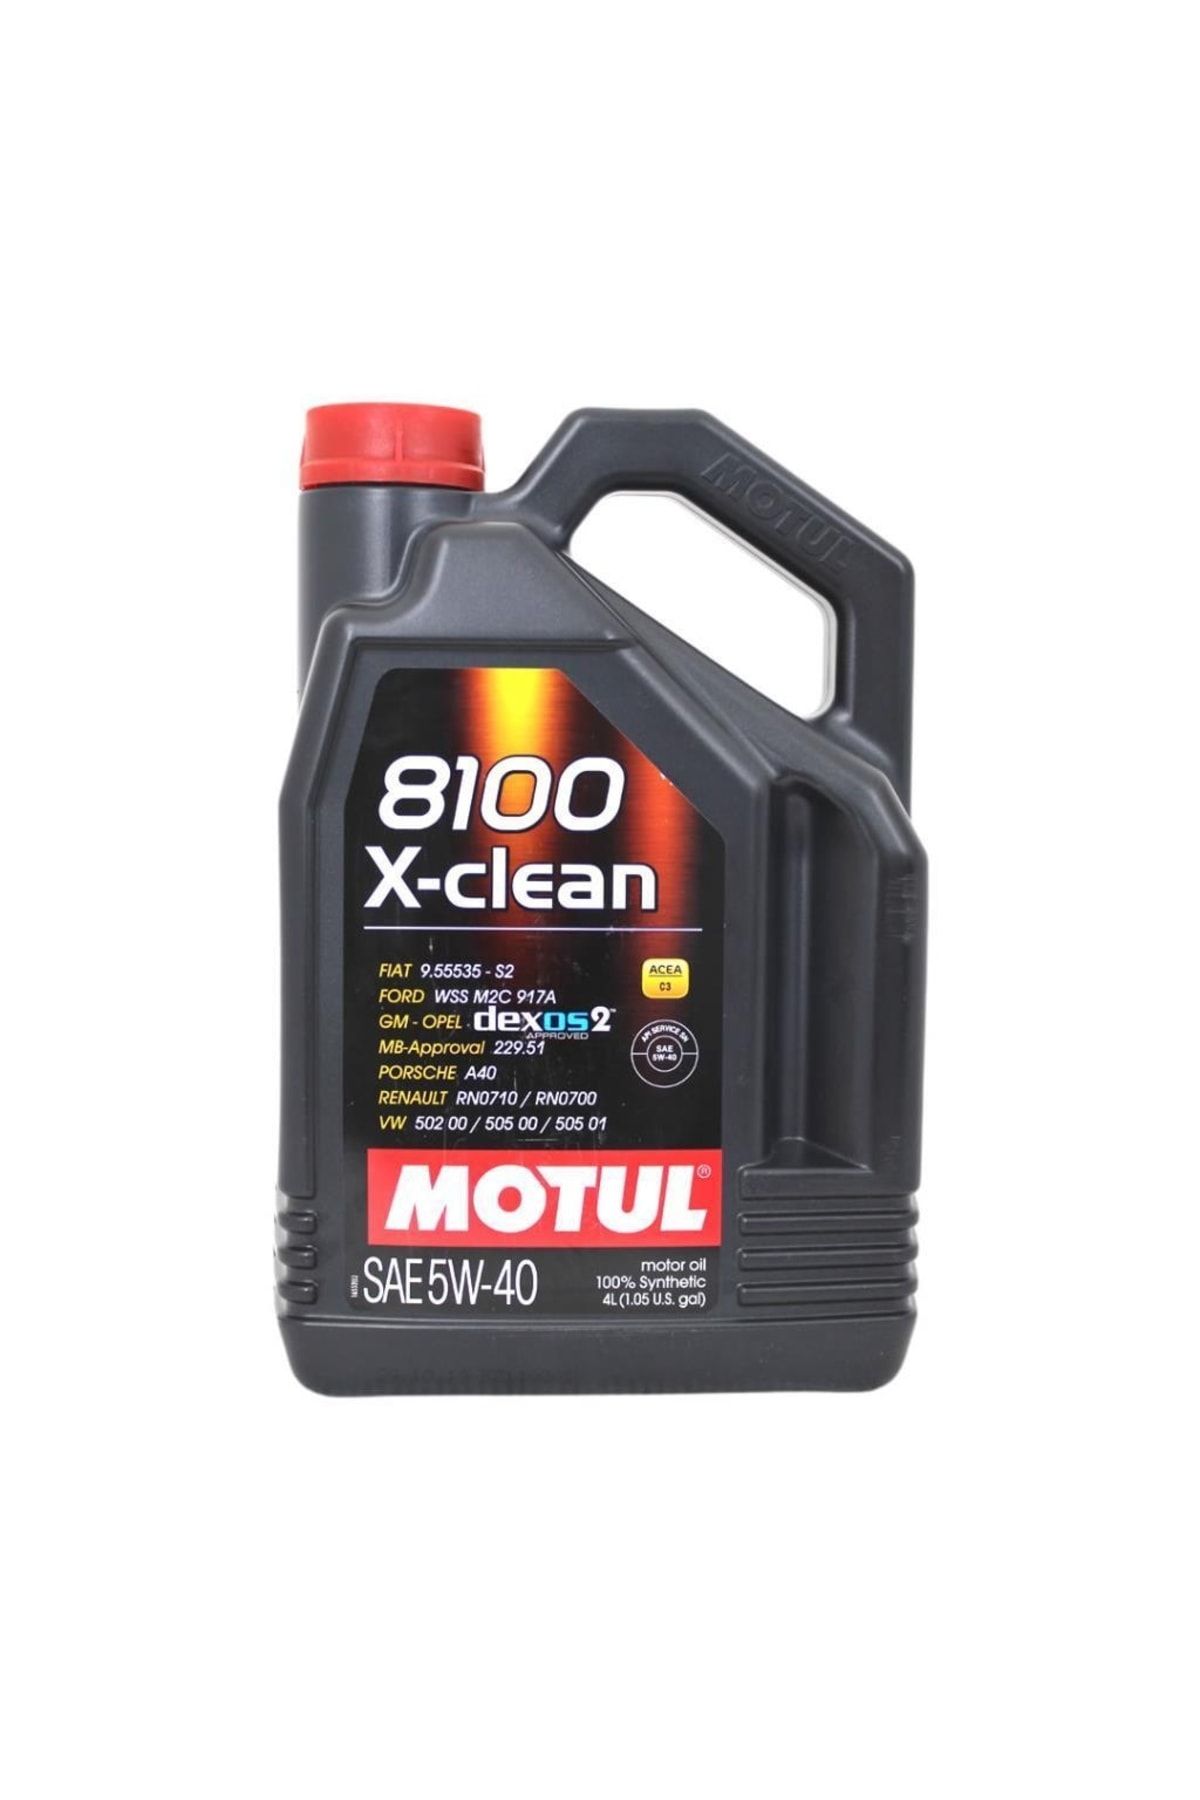 Motul 8100 X-clean 5w40 4 Litre